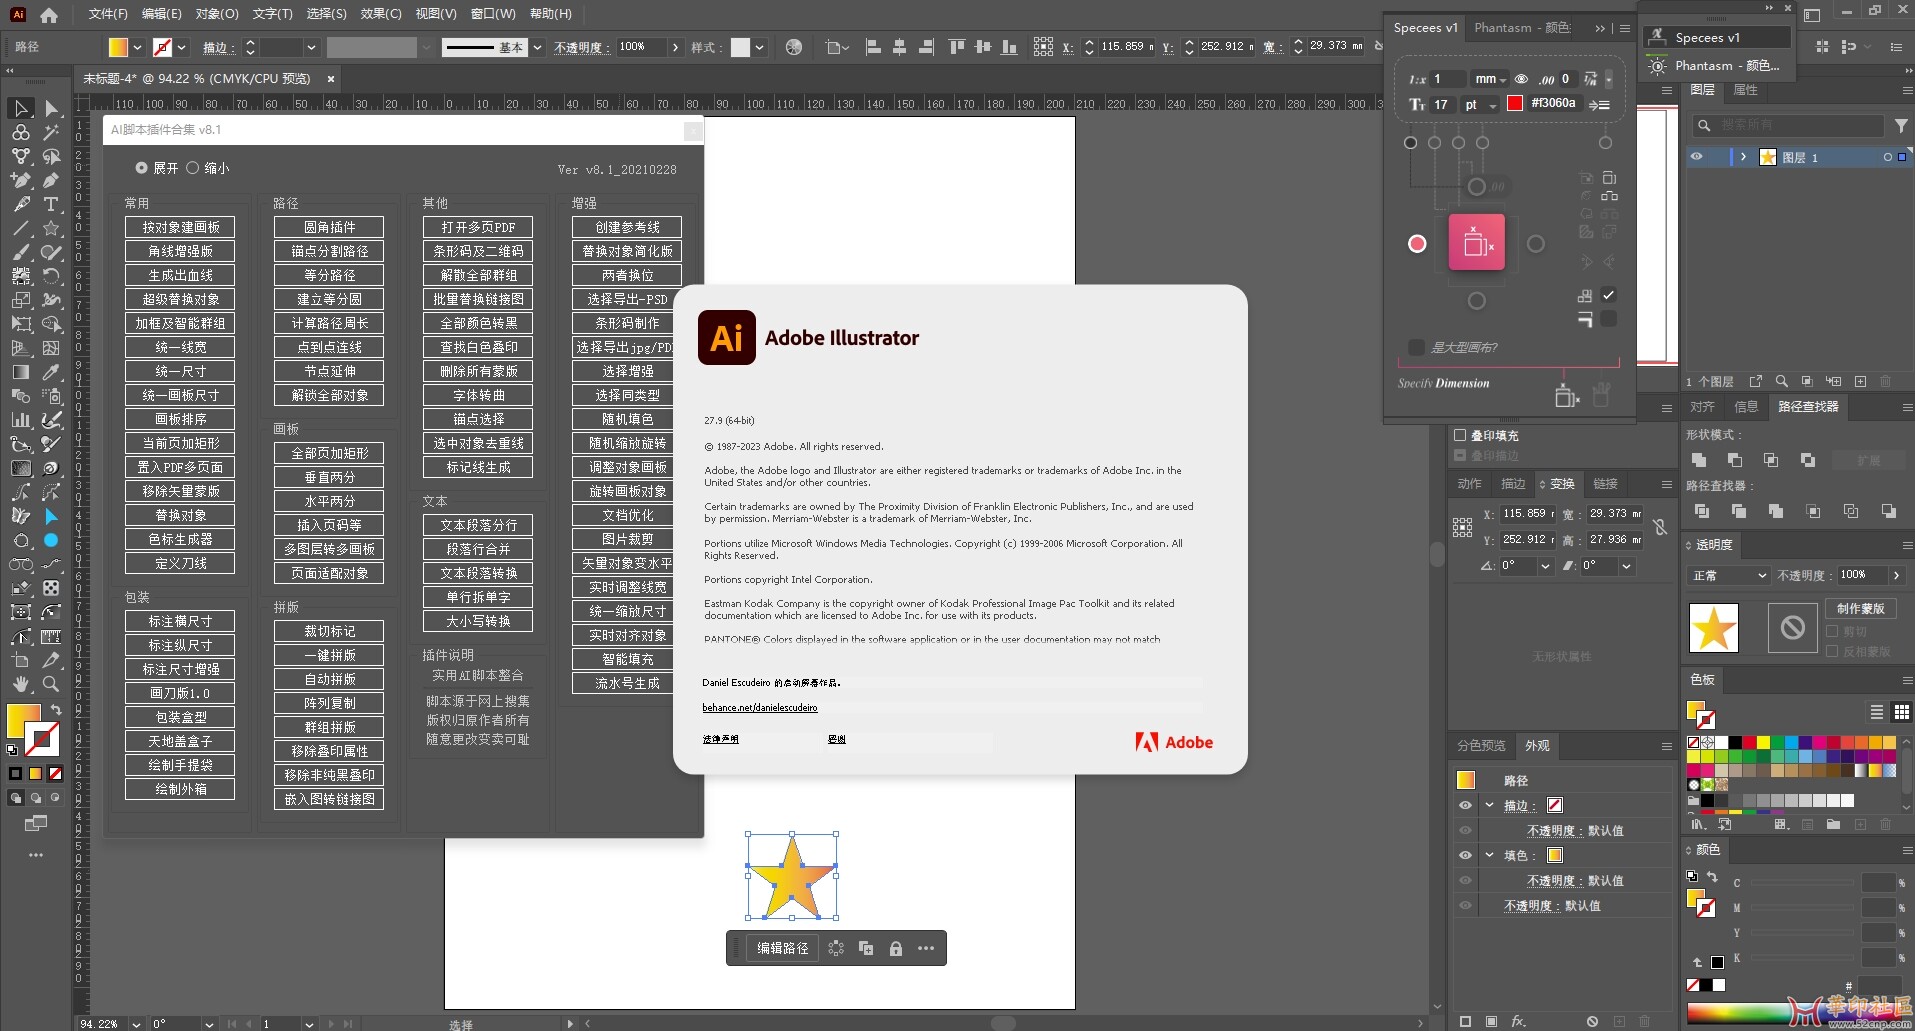 Adobe Illustrator 2023 v27.9.0.80 x64 免激活版{tag}(2)